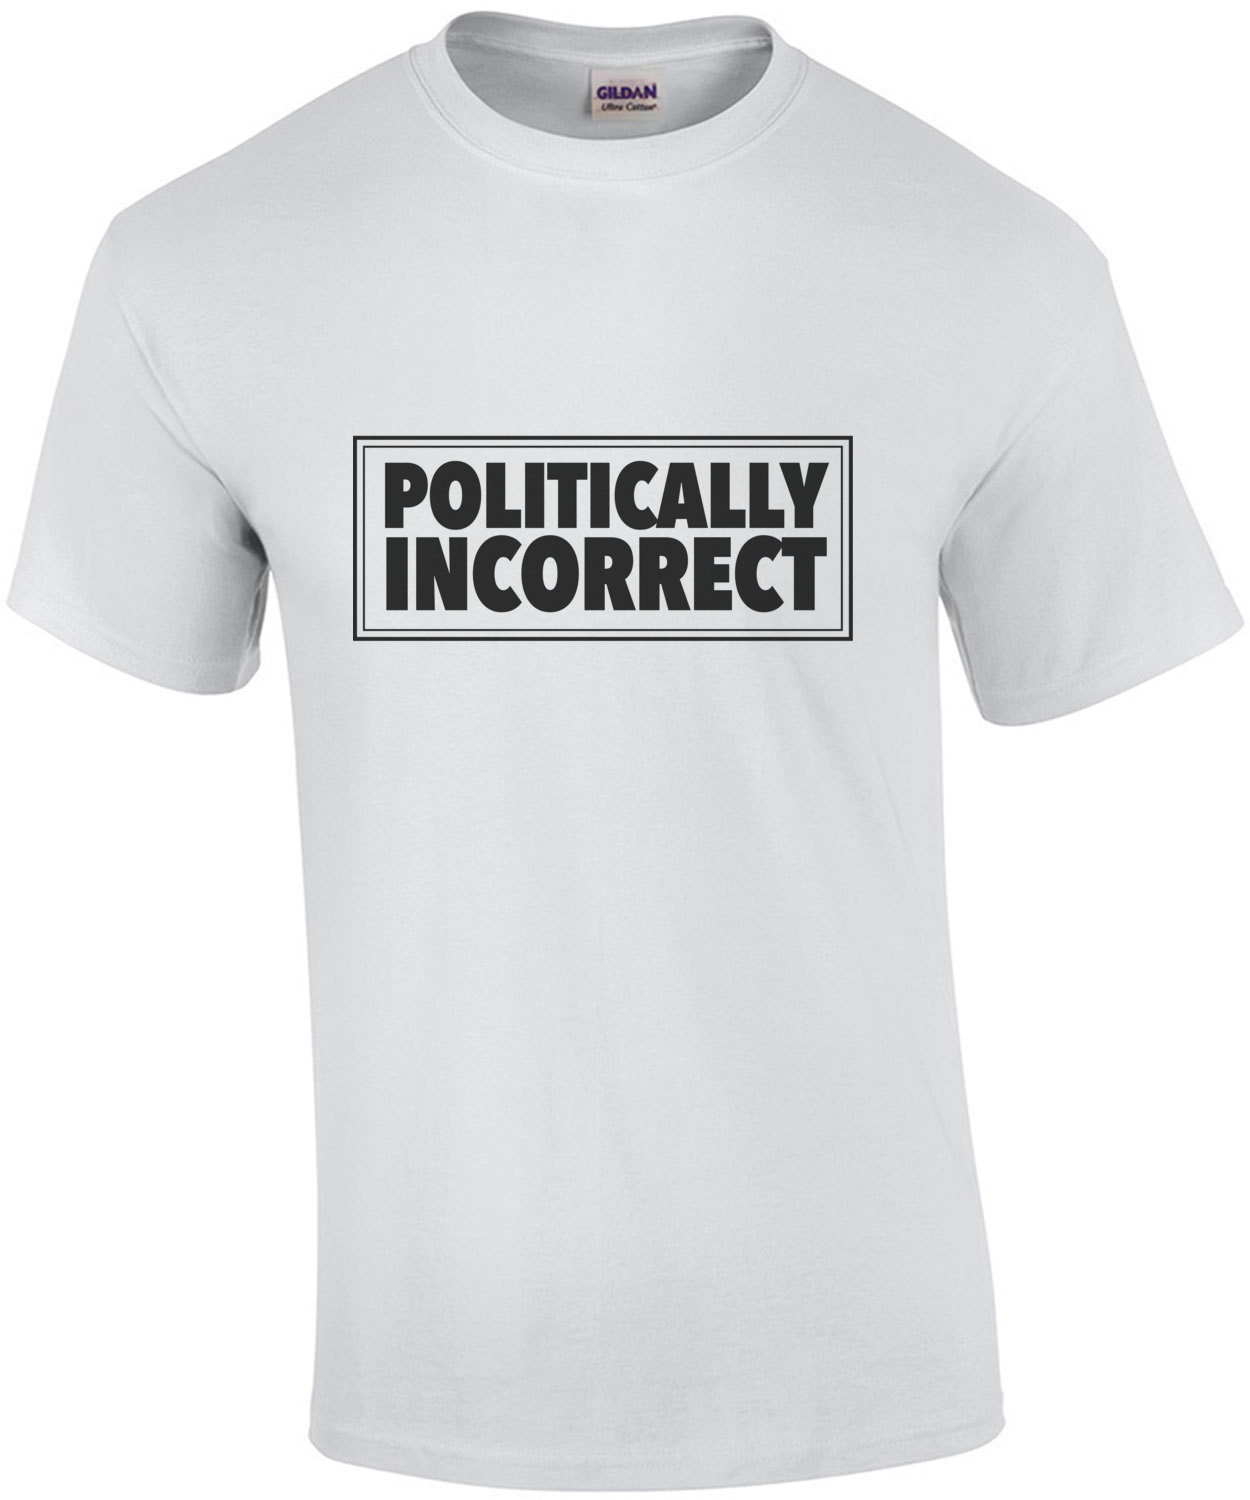 Politically incorrect t-shirt